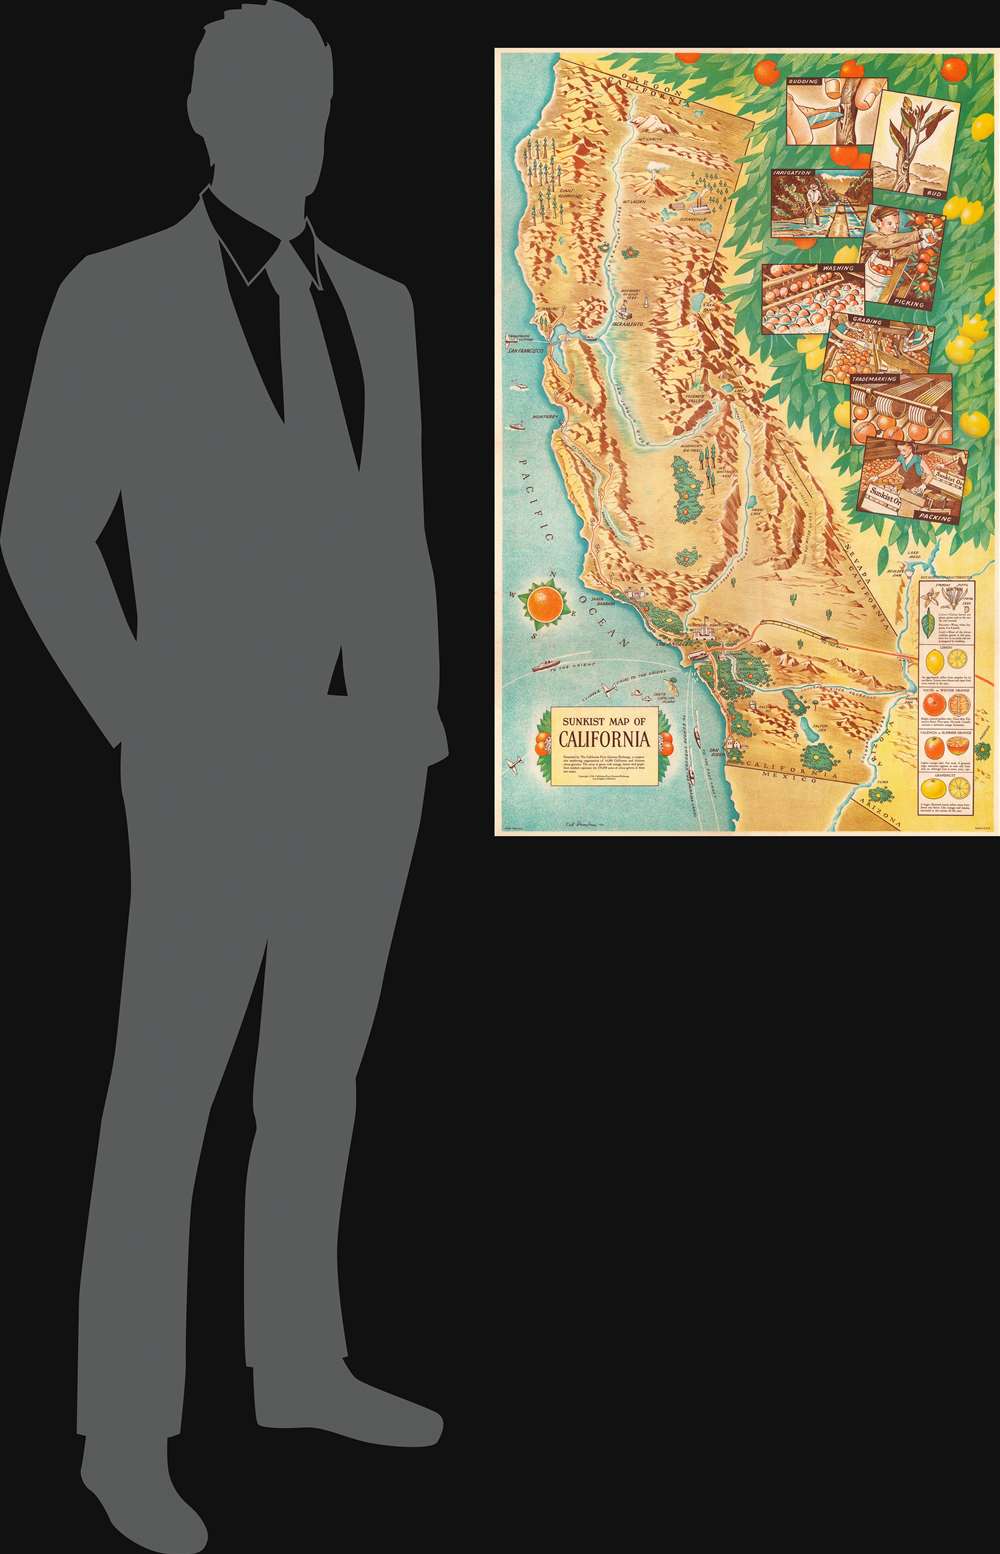 Sunkist Map of California. - Alternate View 1